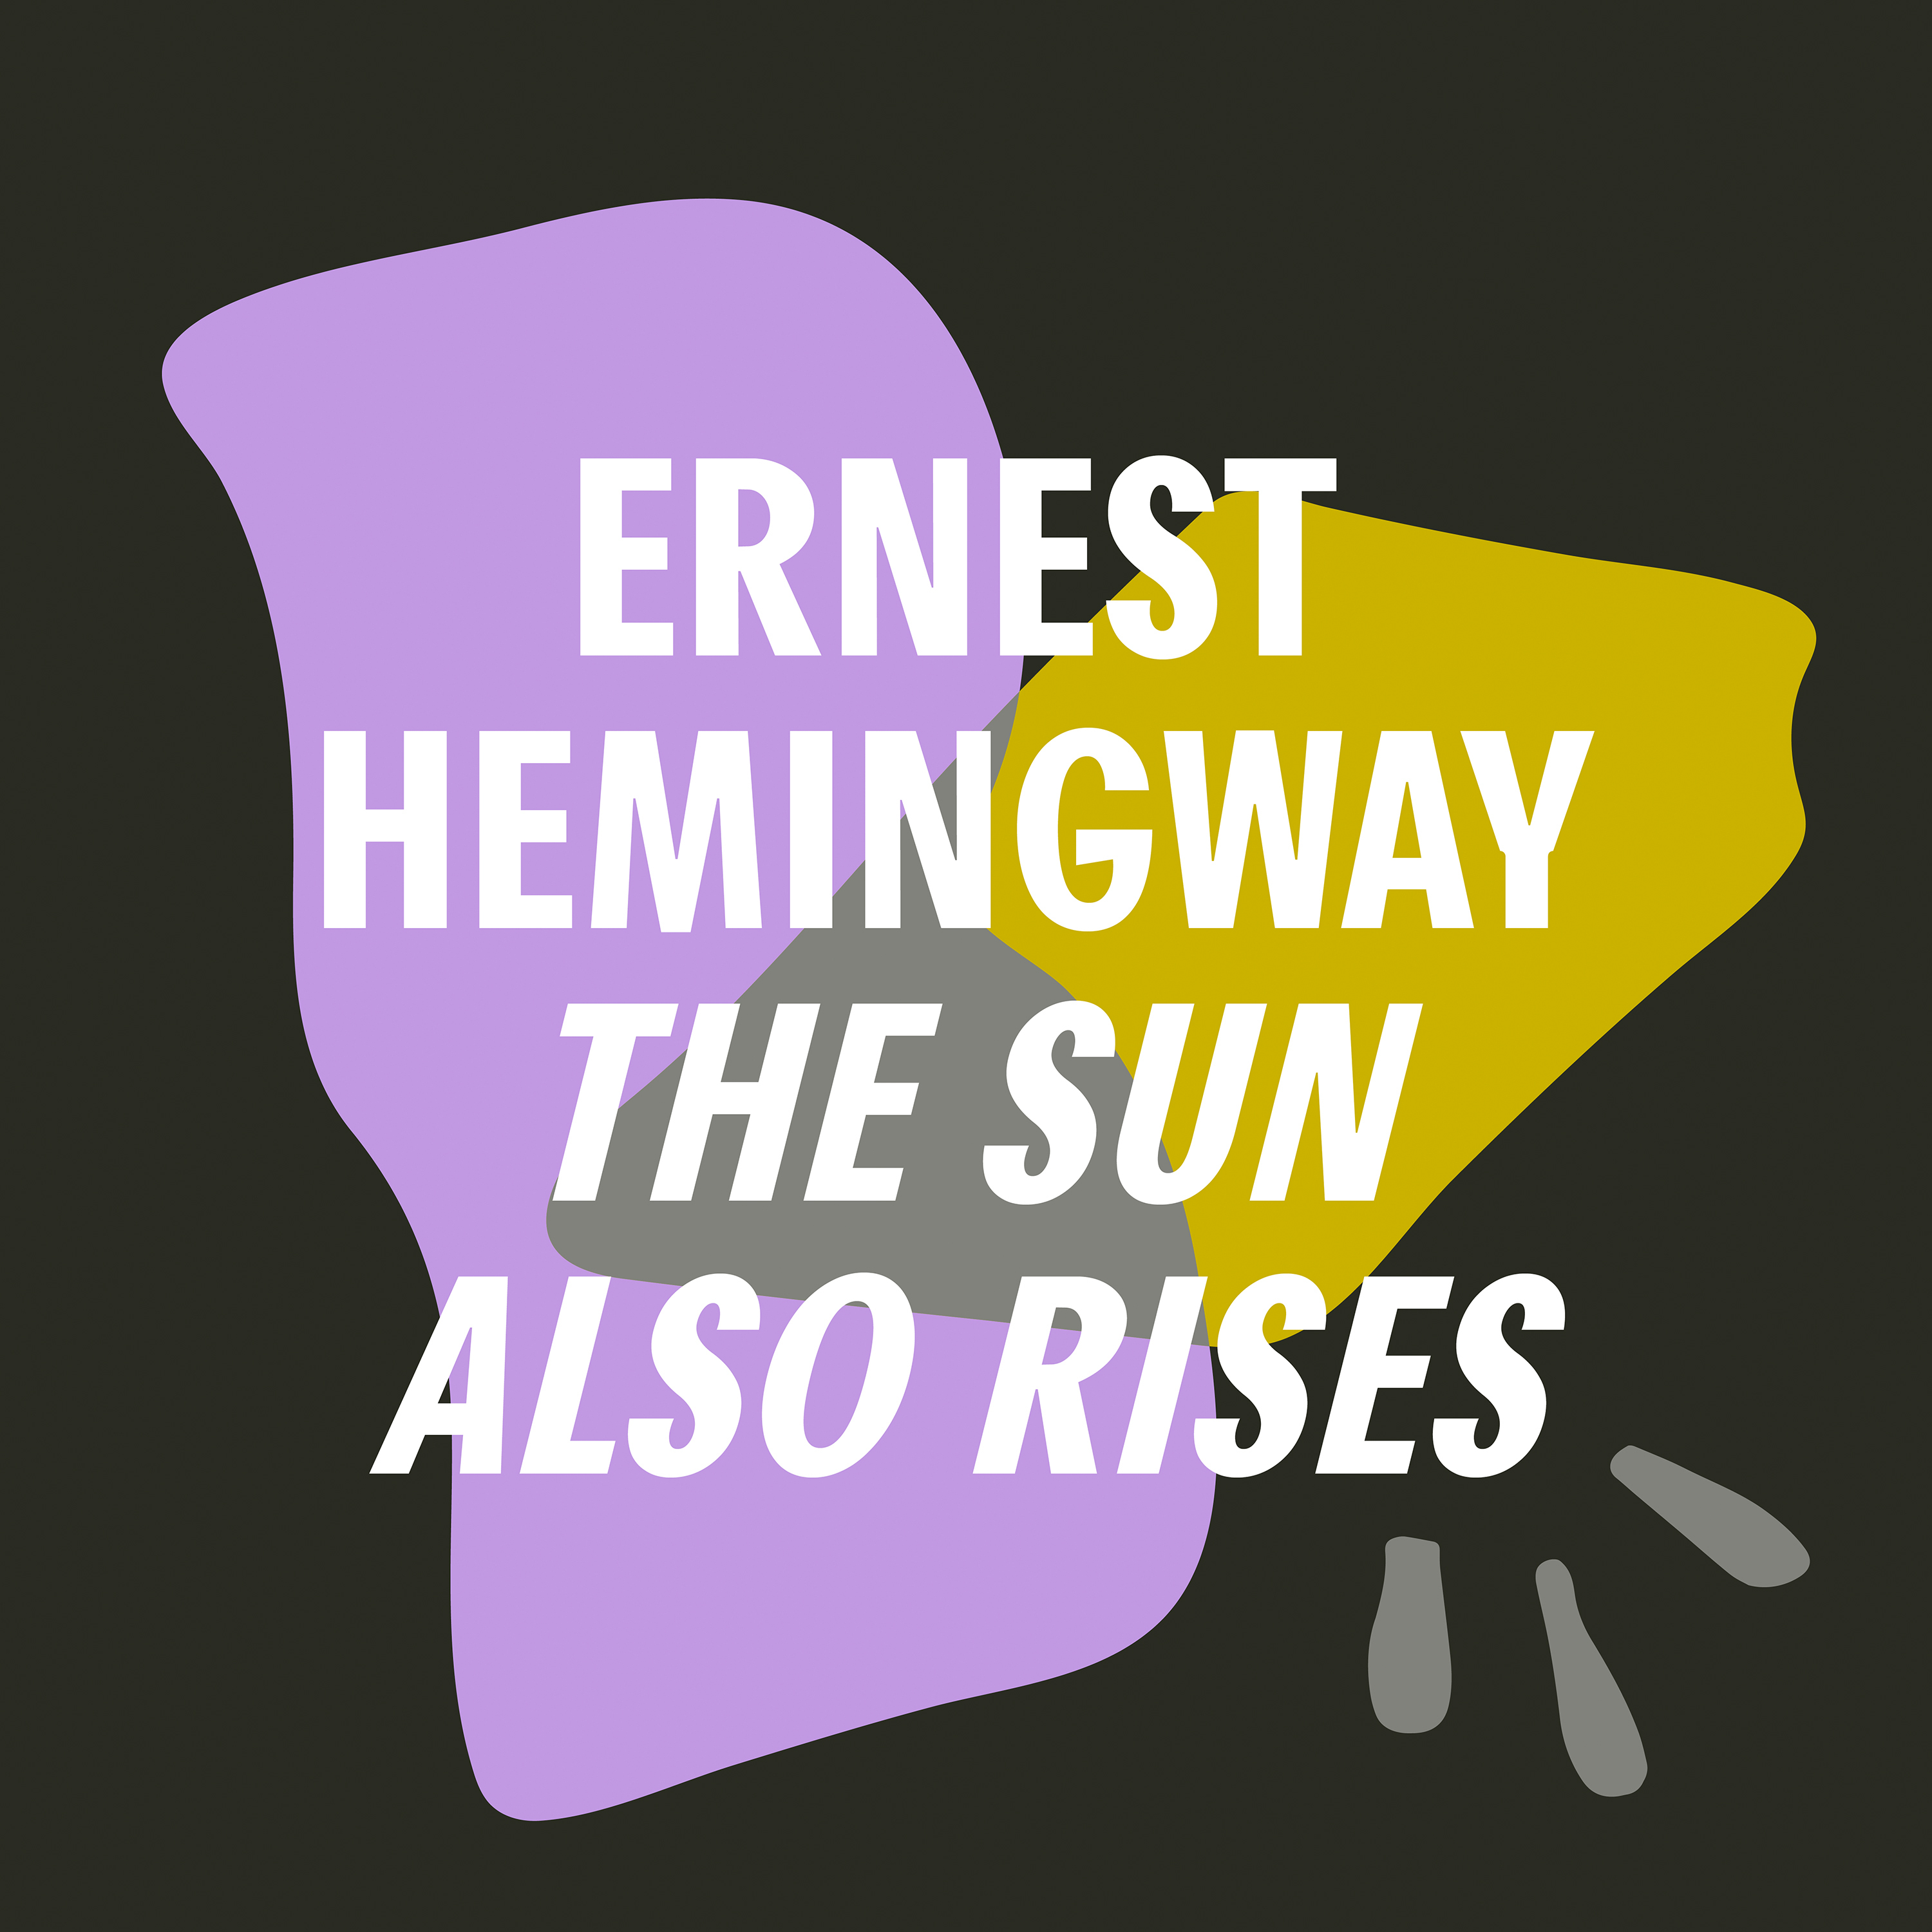 De man en zijn mythe | Ernest Hemingway - The Sun Also Rises